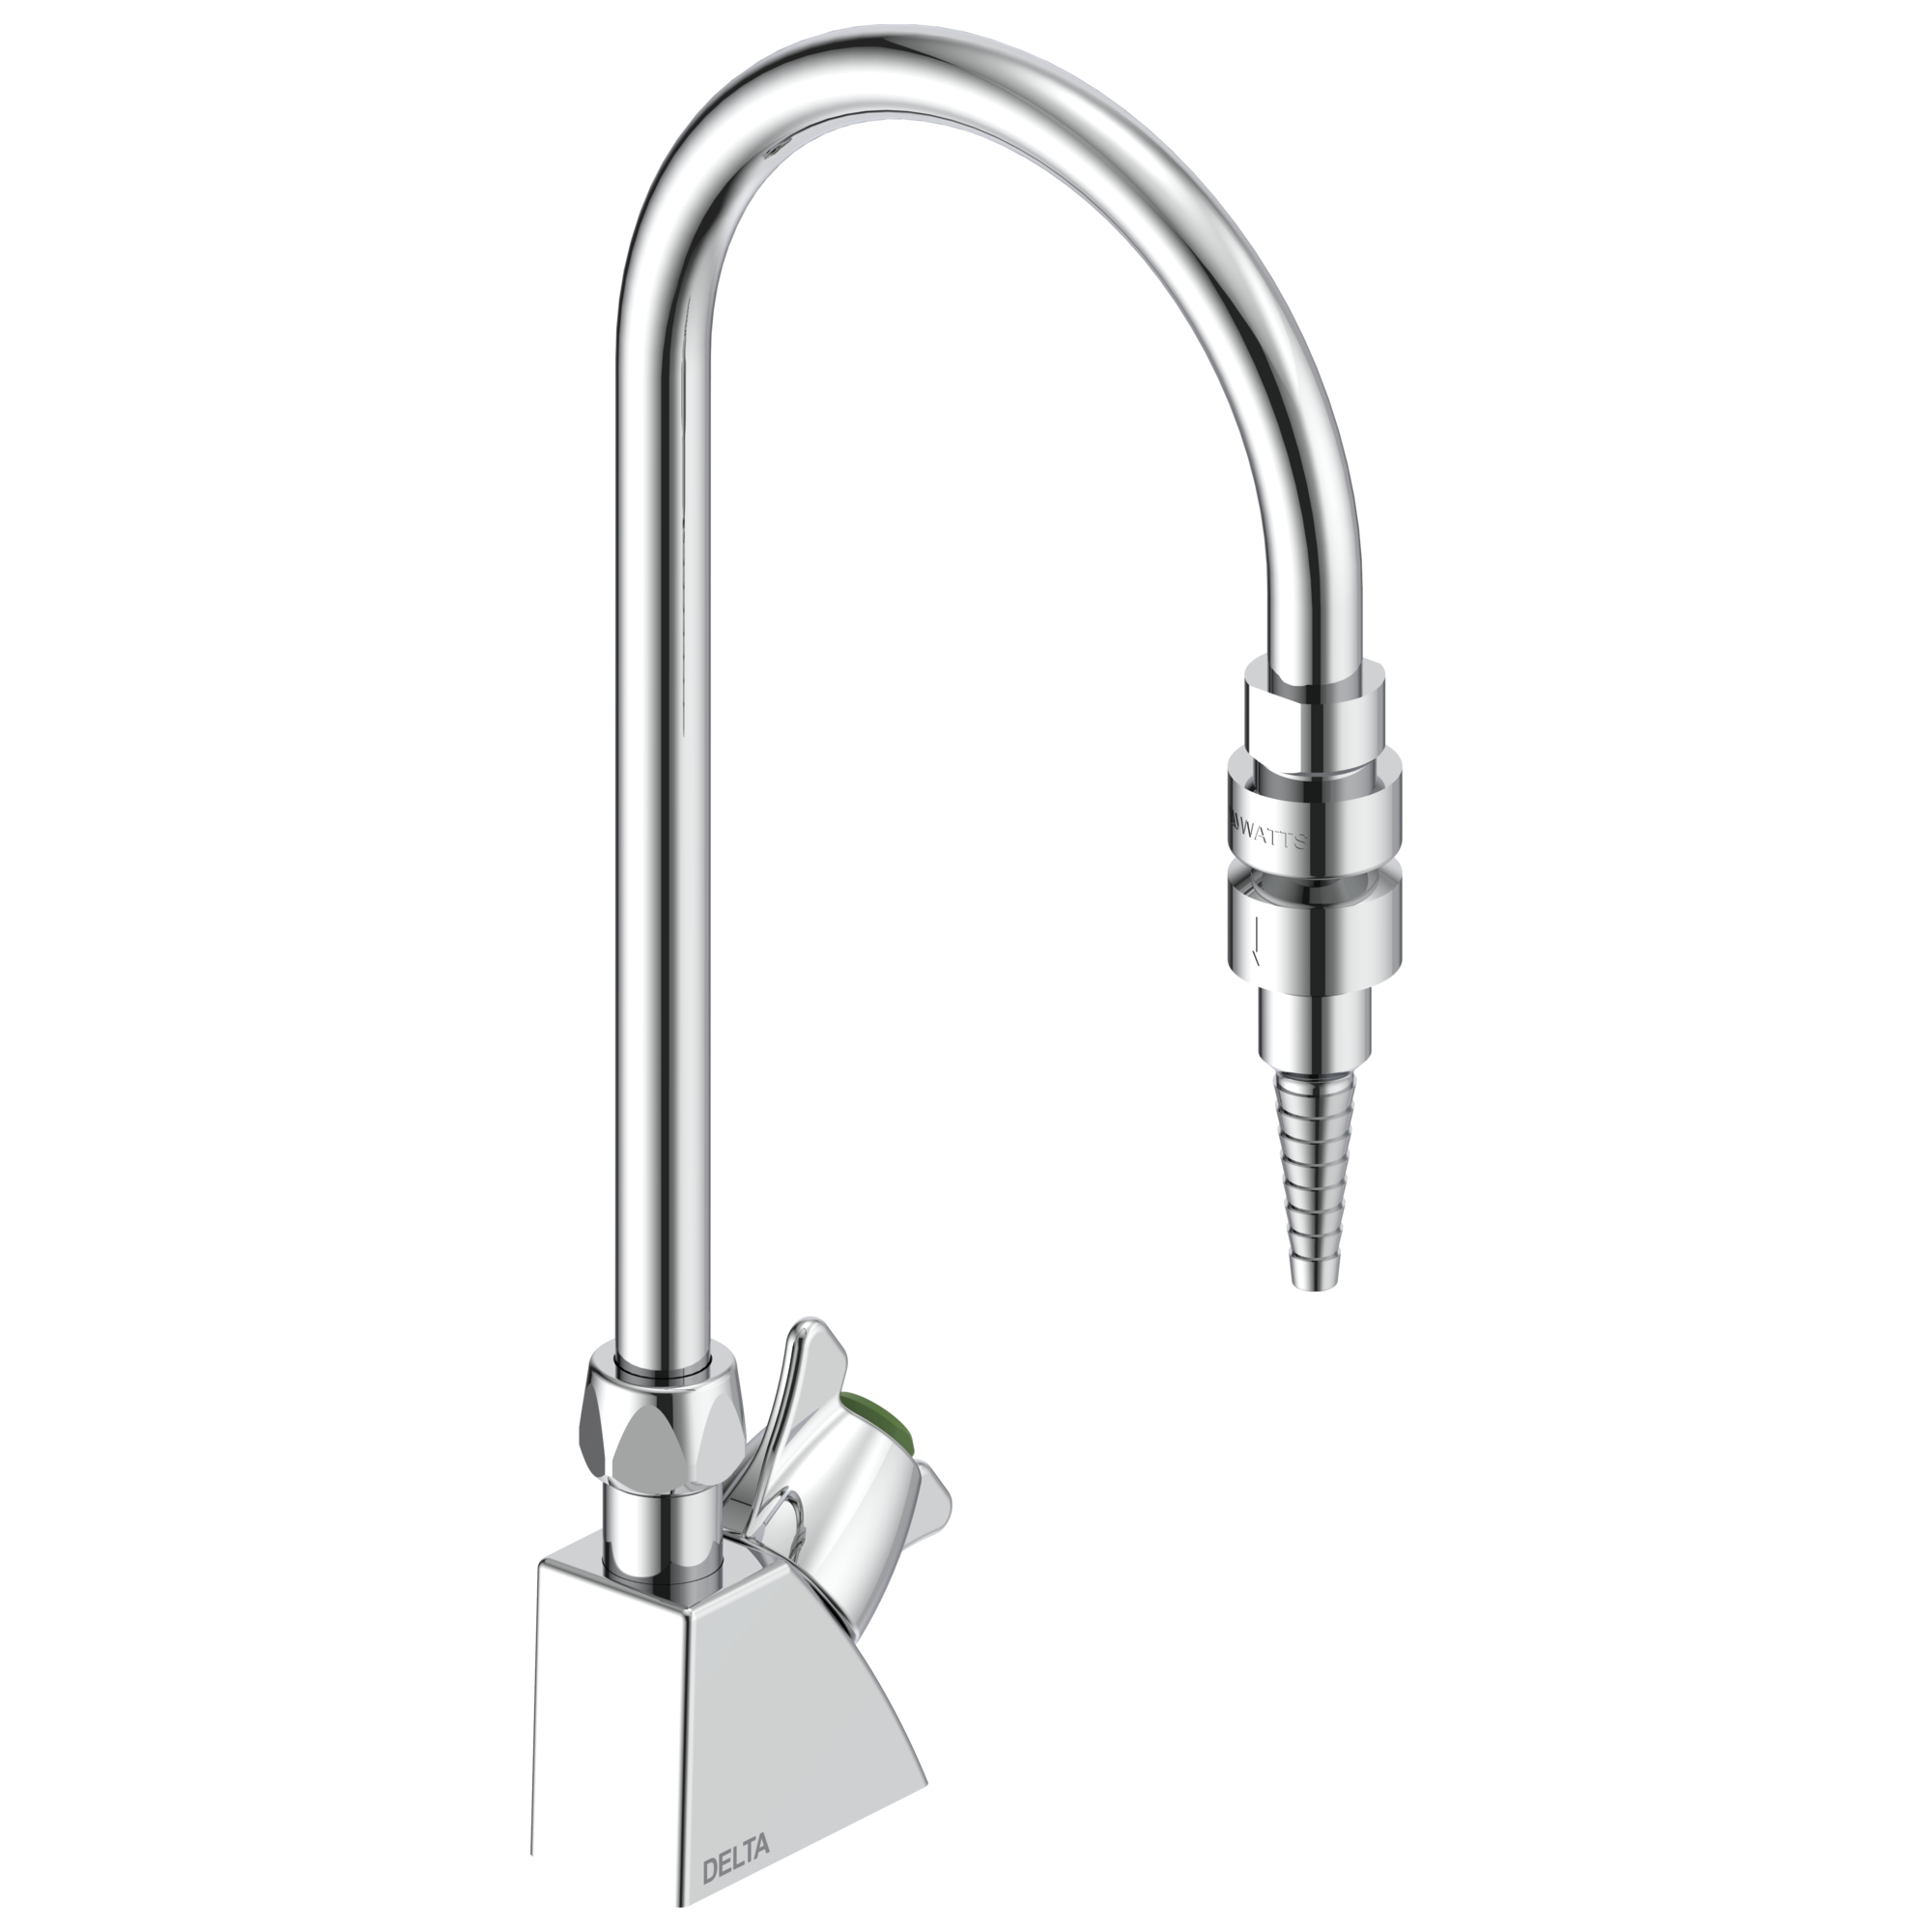 Delta W6600-9 Commercial Single Handle Deck Mount Water Faucet